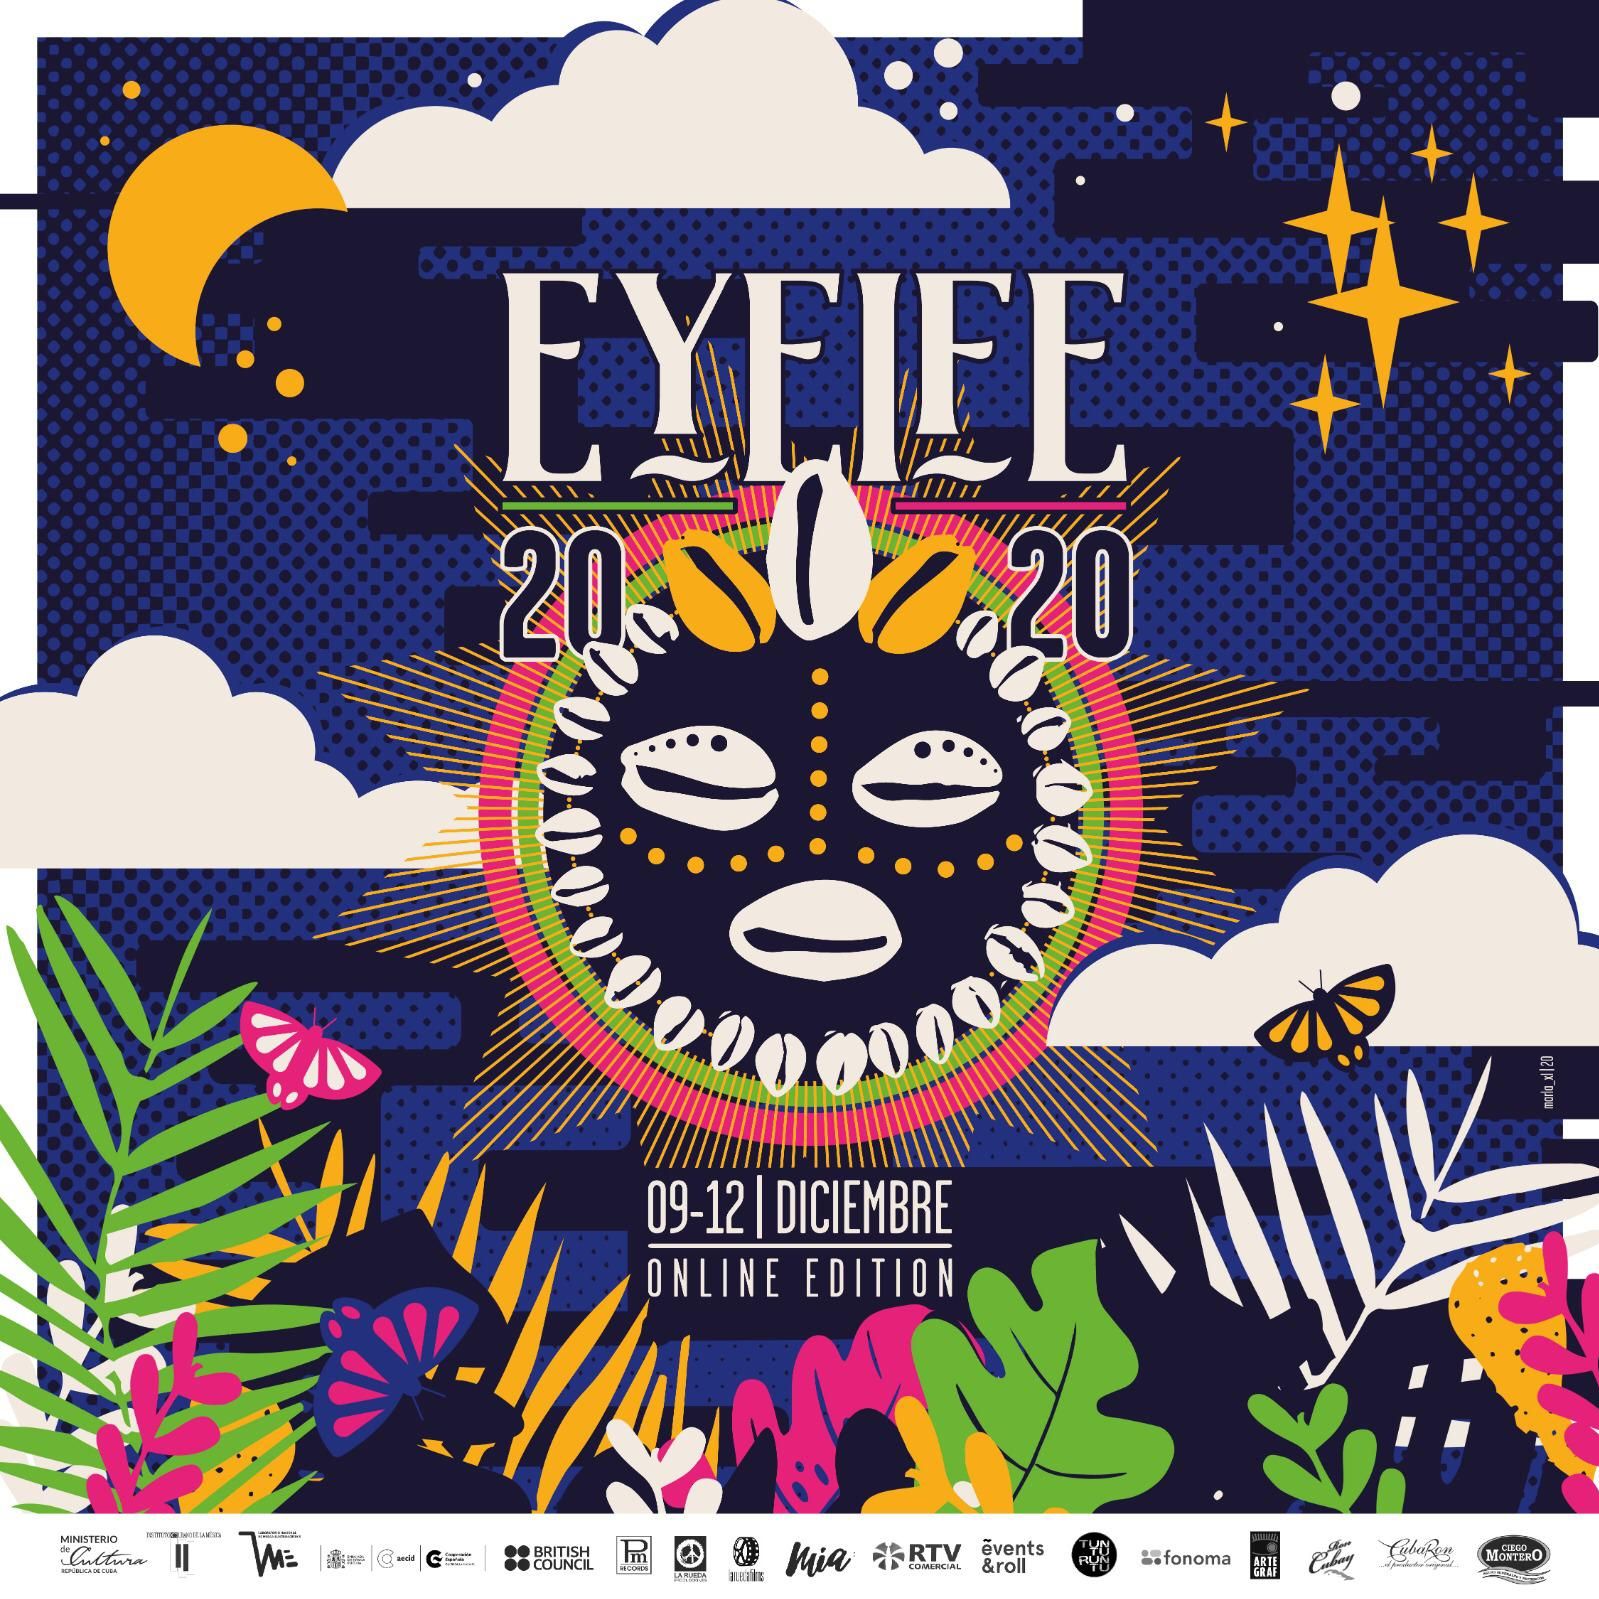 Eyeife Festival 2020 online edition